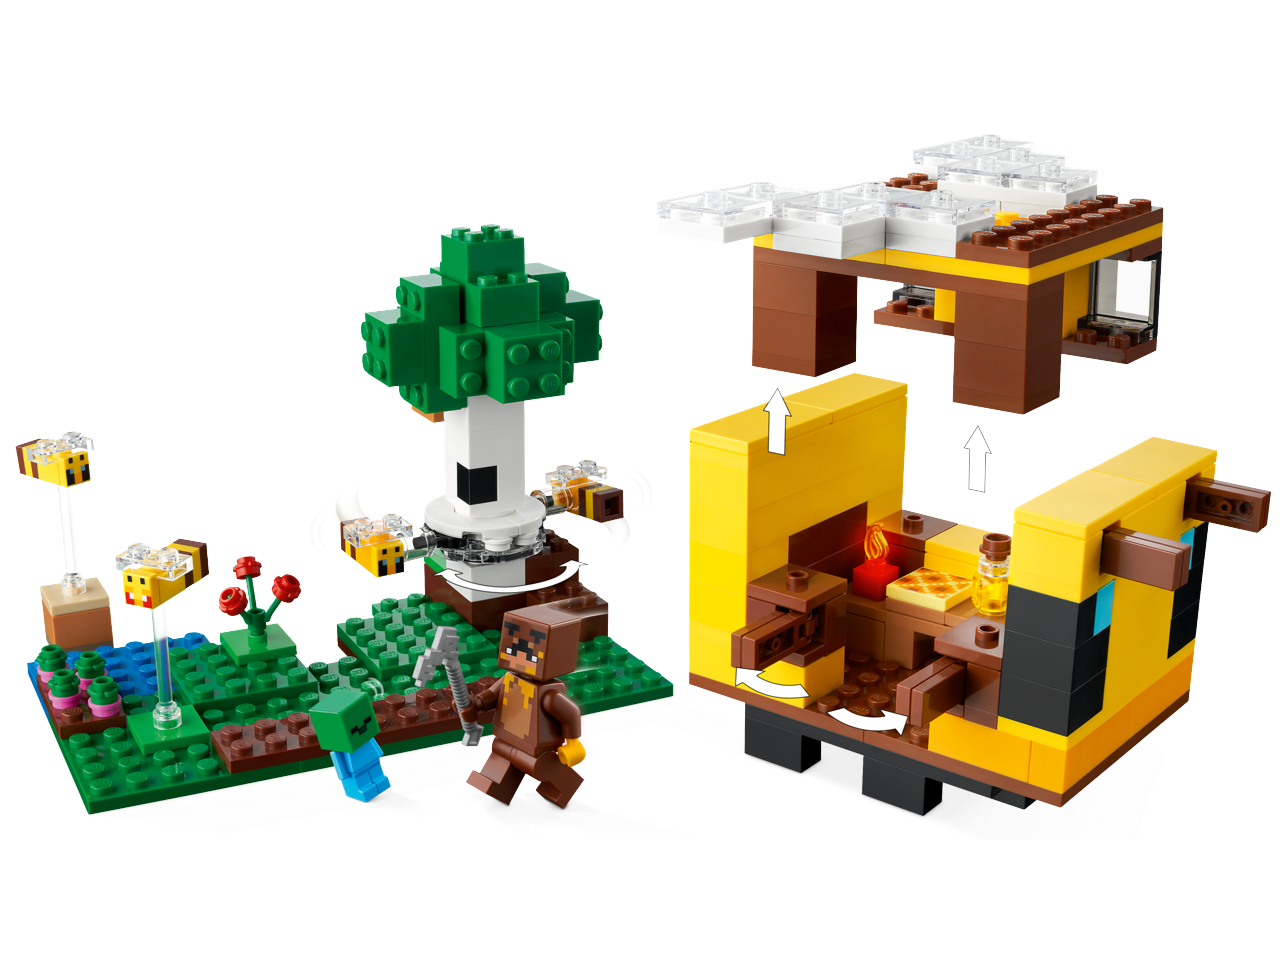 LEGO Minecraft - Bikupan (21241)